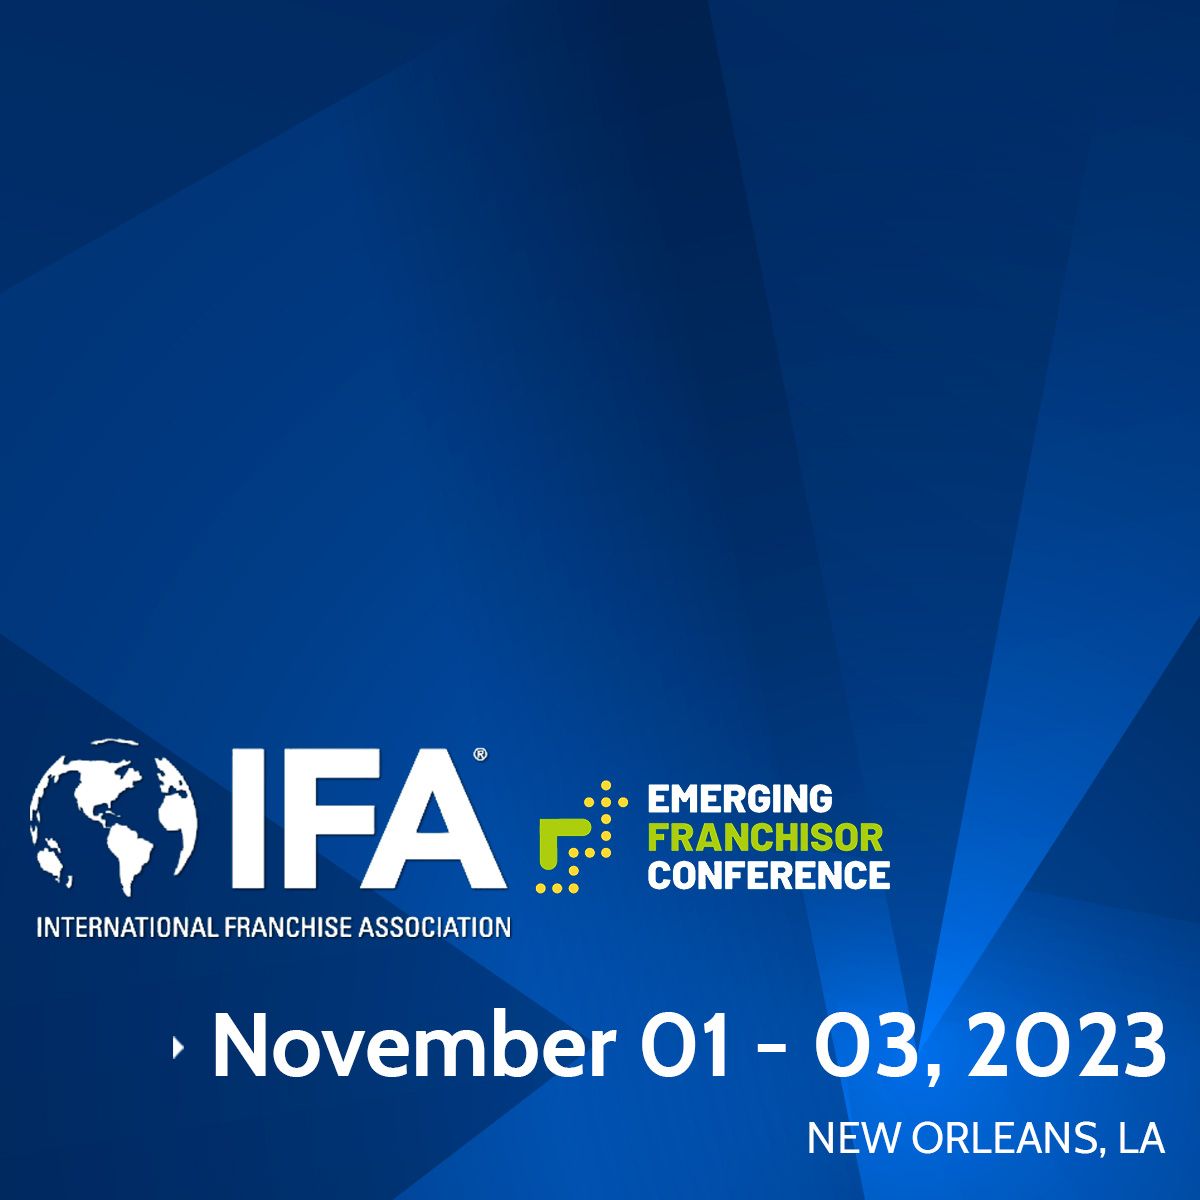 IFA Emerging Franchisor Conference